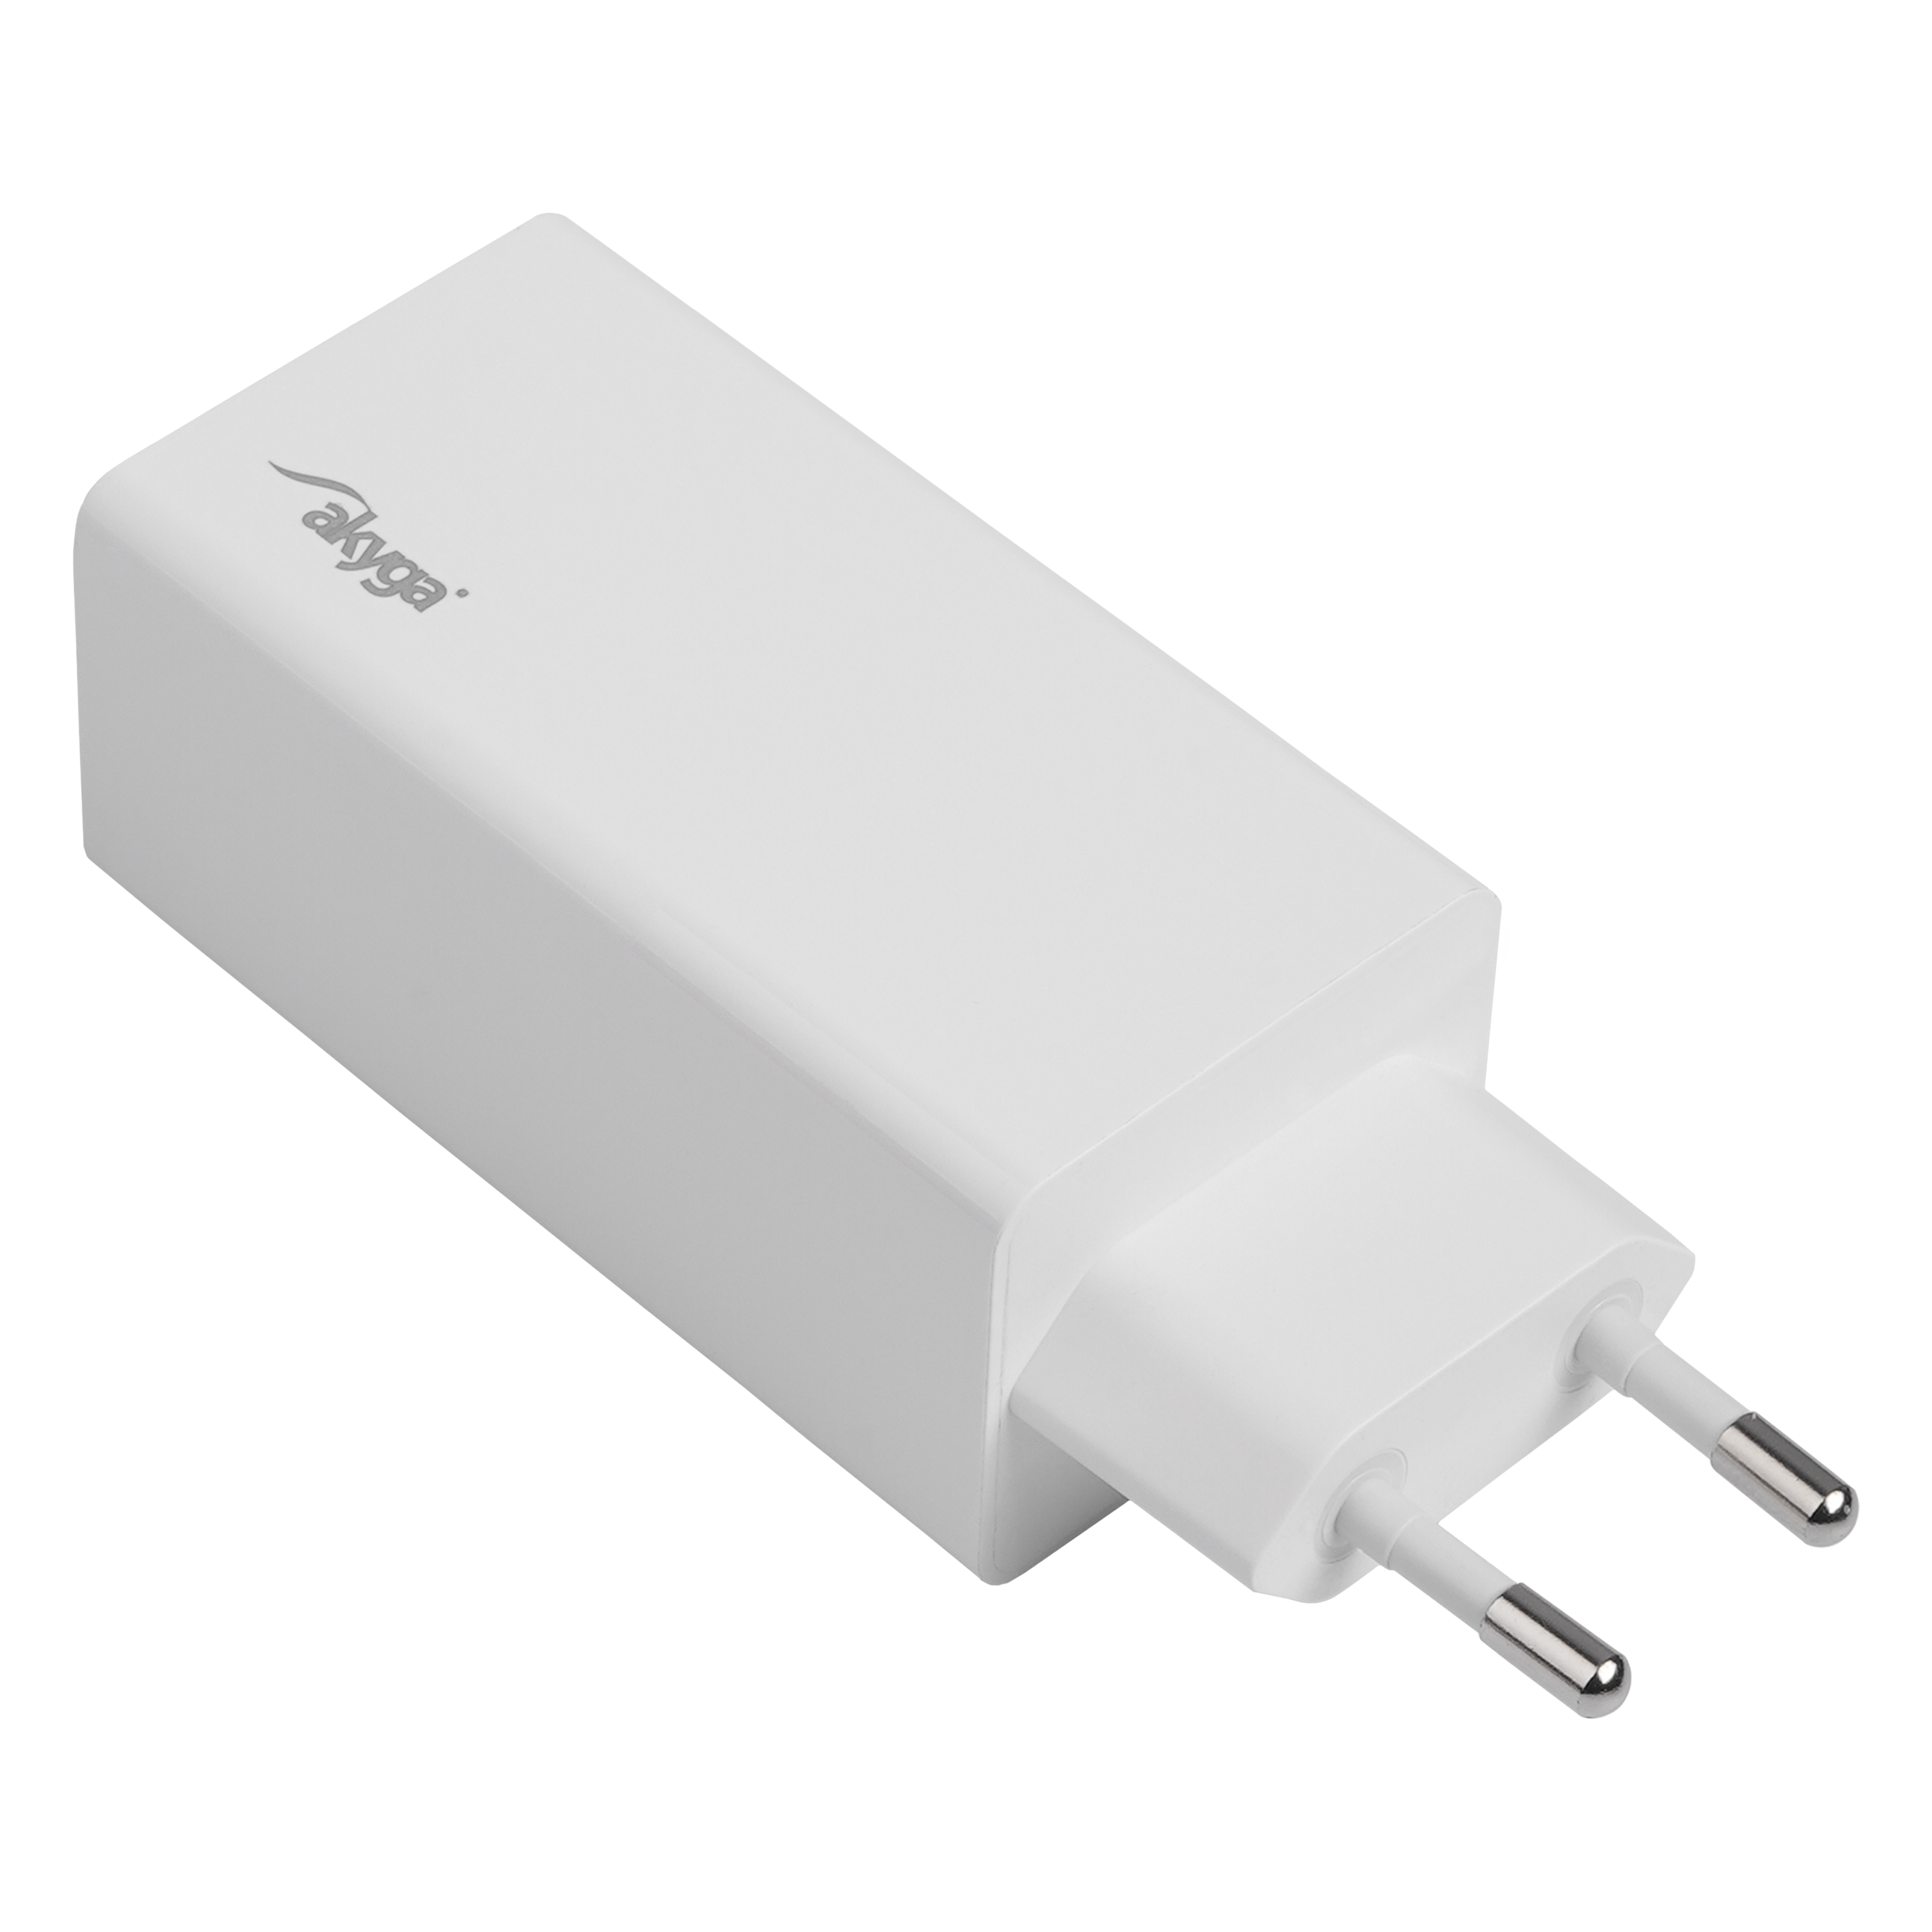 USB-Ladegerät 230V auf USB-A und USB-C Quickcharge